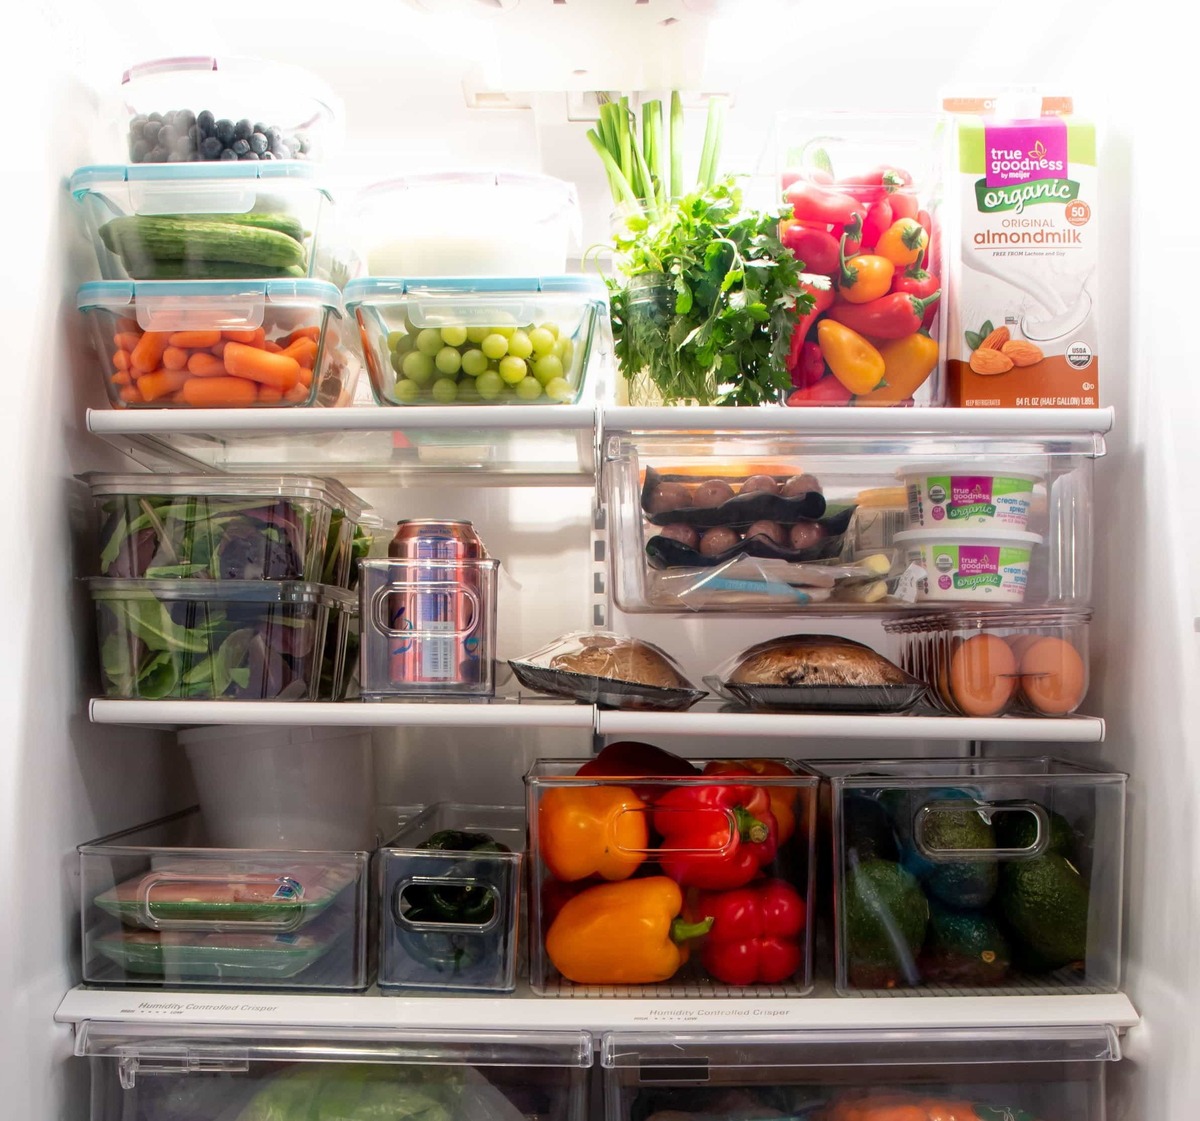 How To Organize The Refrigerator